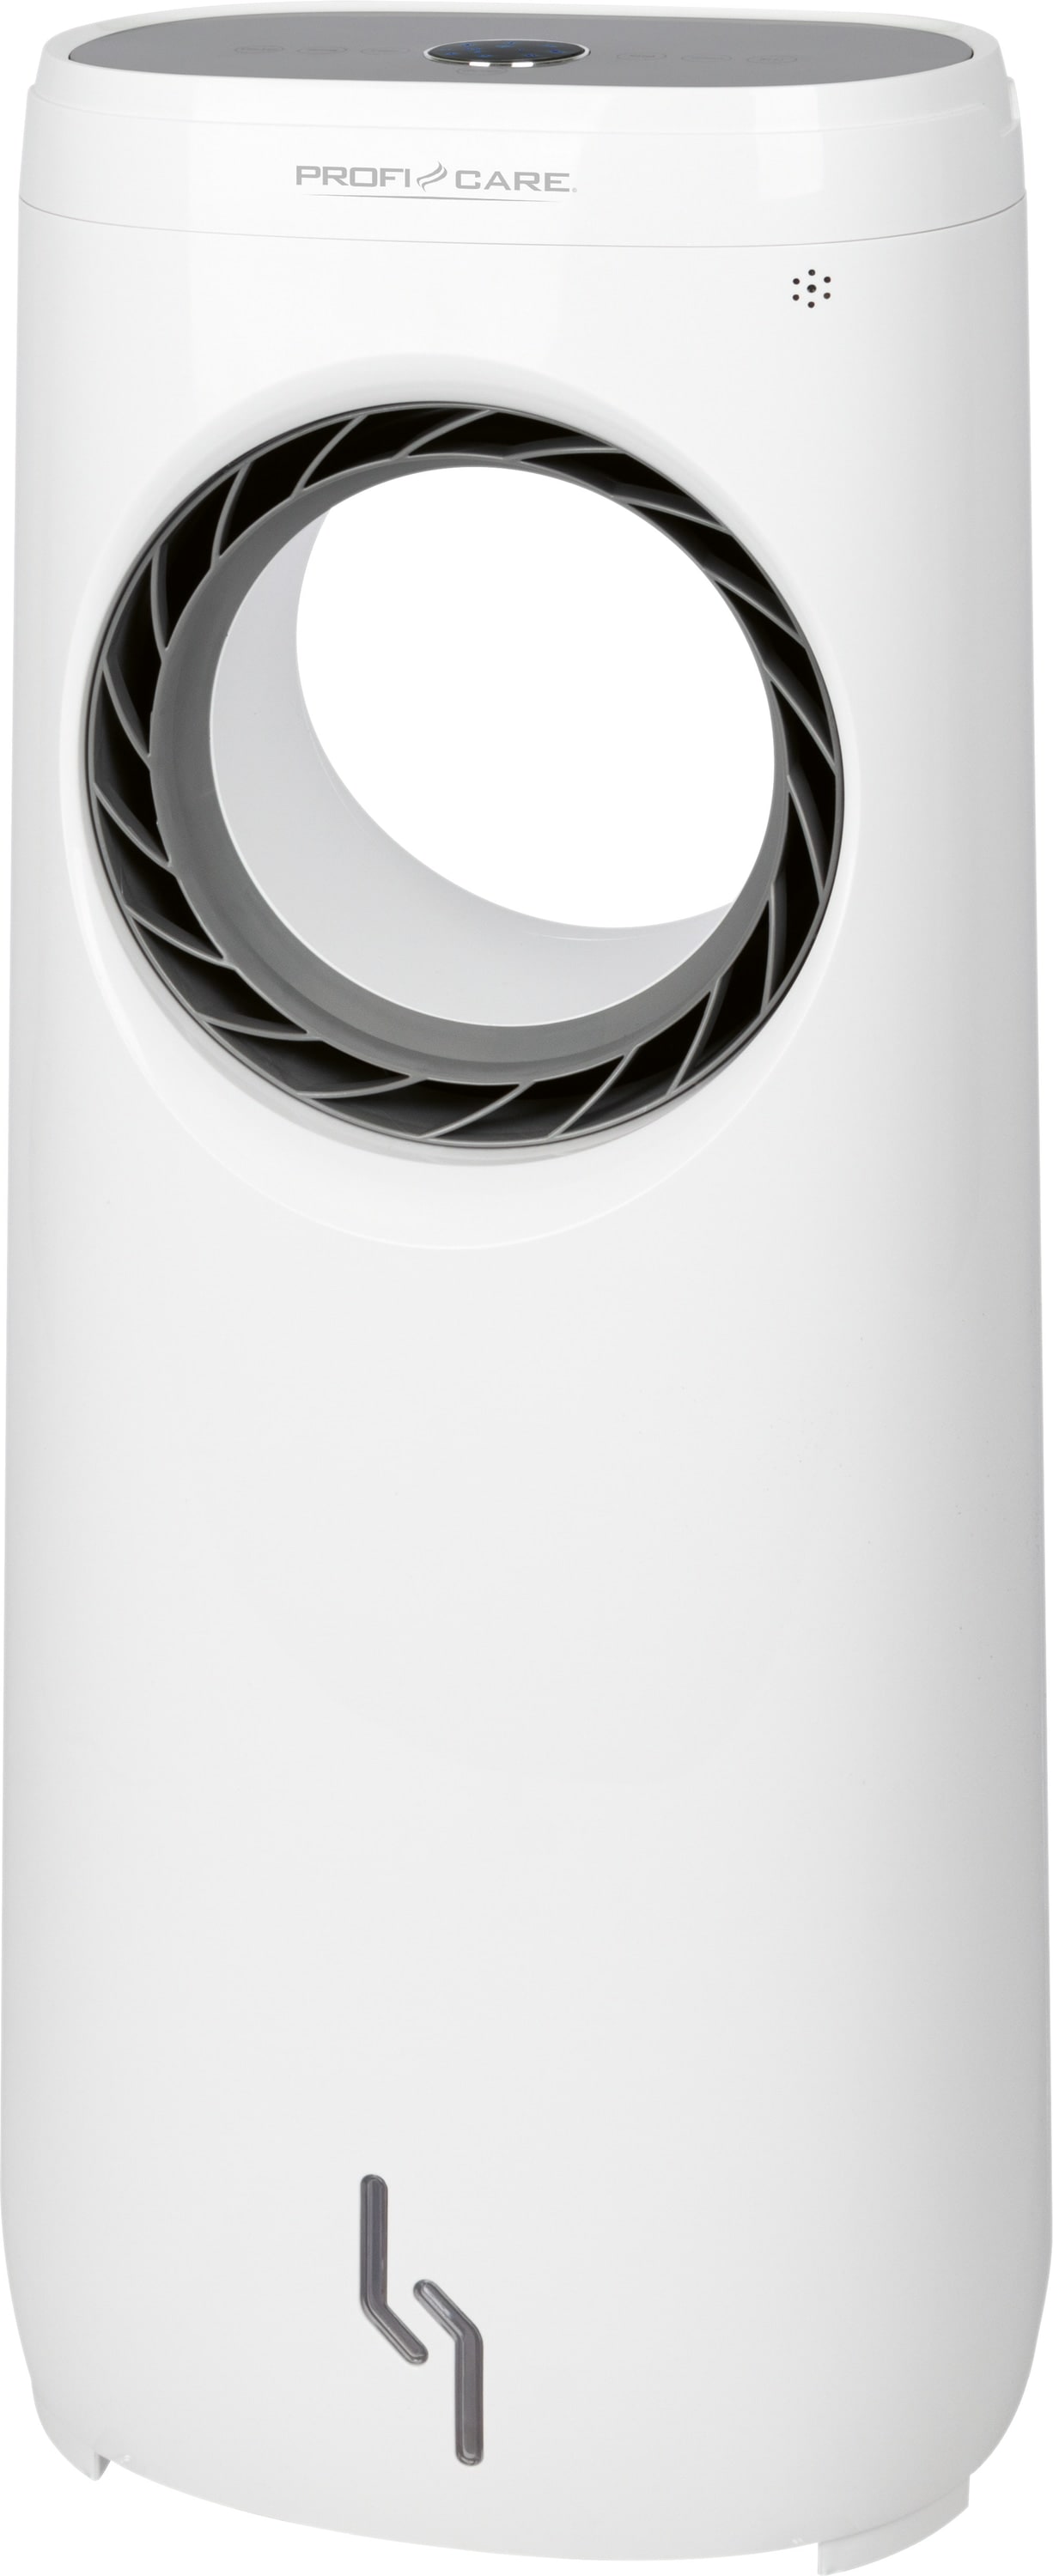 PROFI CARE Luftkühler PC-LK 3088, 80 W, WiFi, weiß-titan